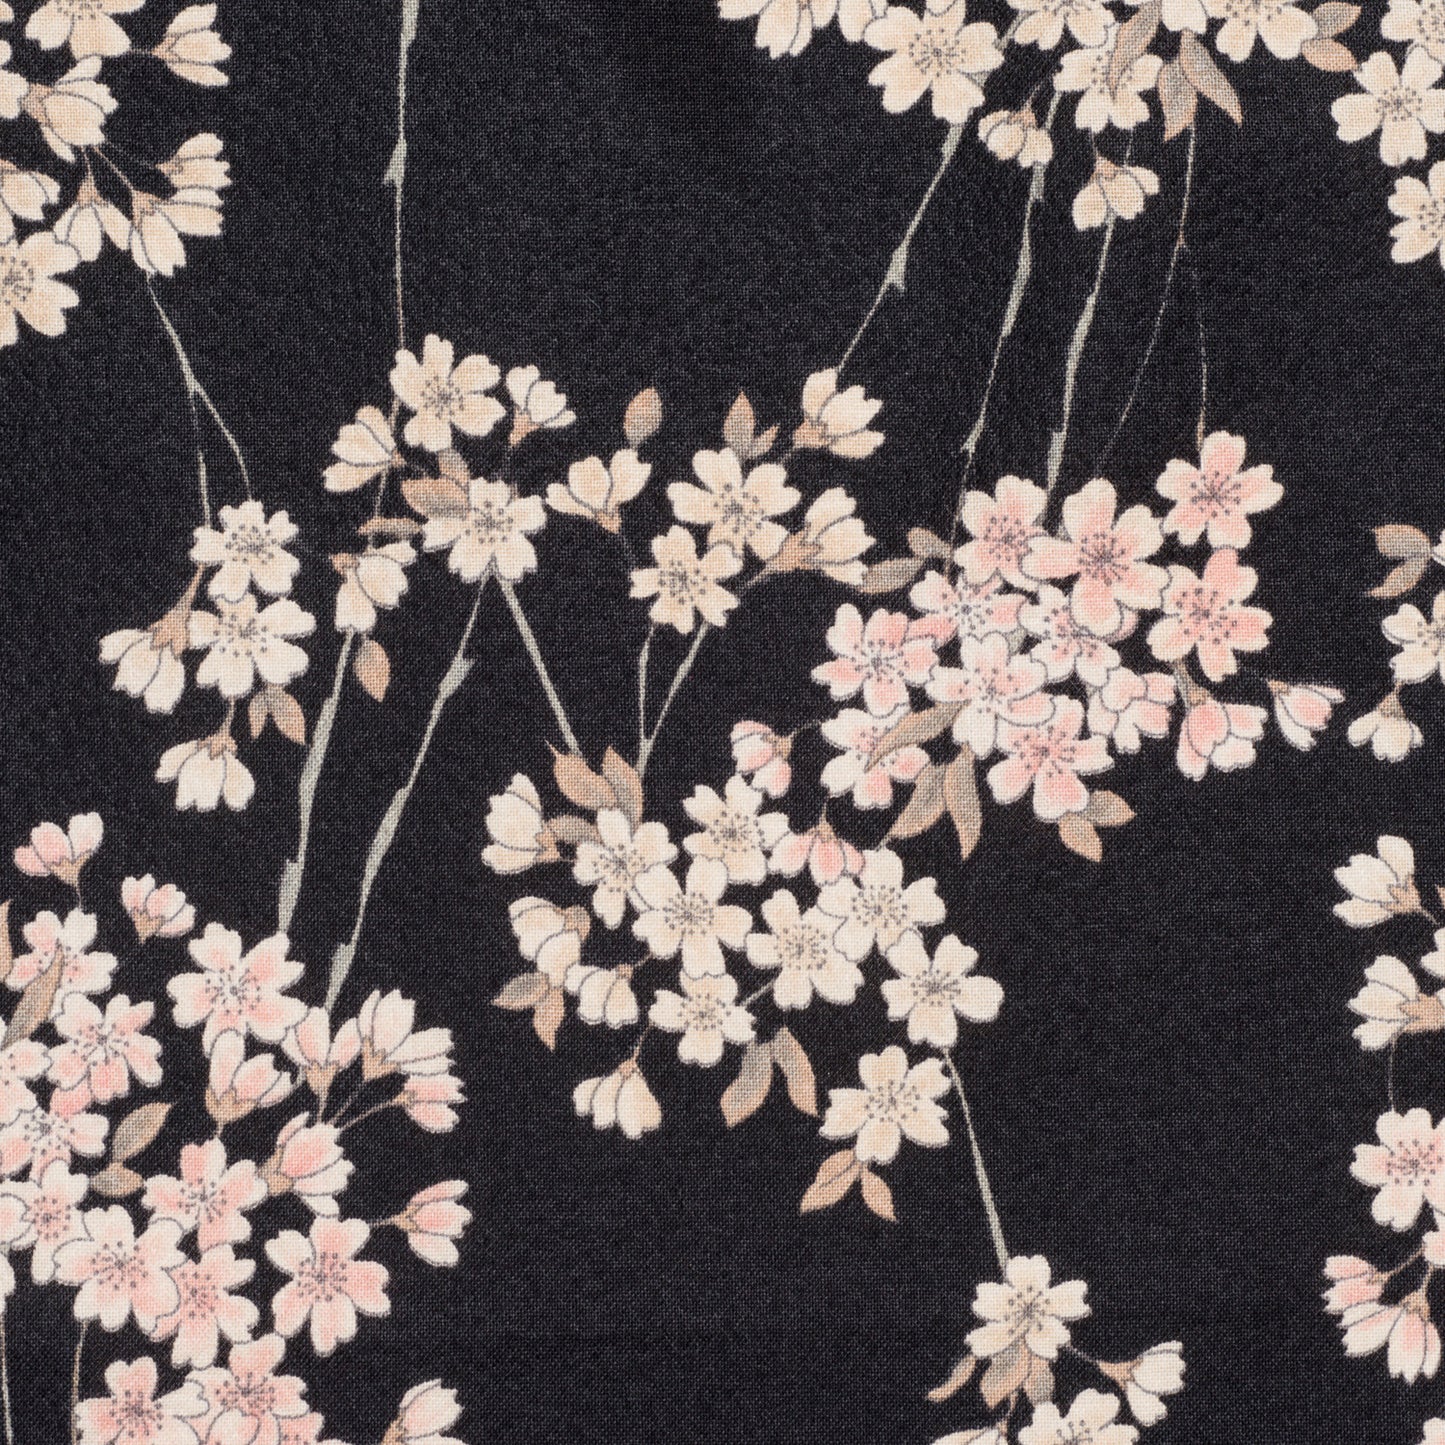 Black Cherry Blossom Ladies Japanese Handkerchief